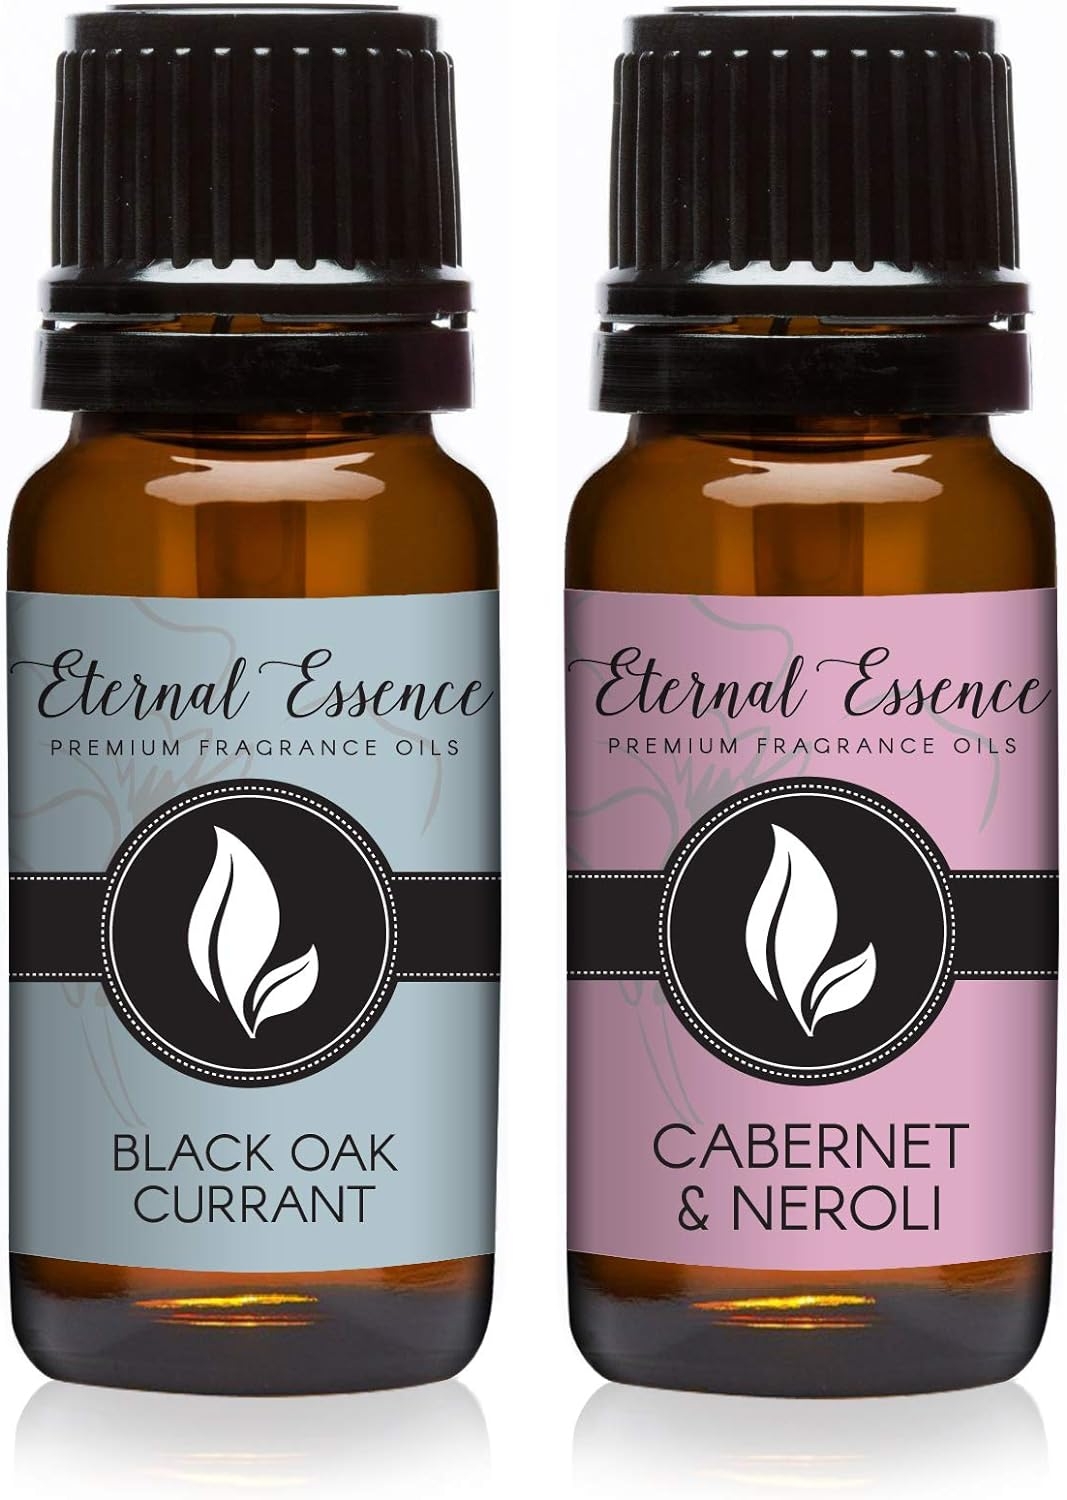 Black Oak Currant & Cabernet & Neroli